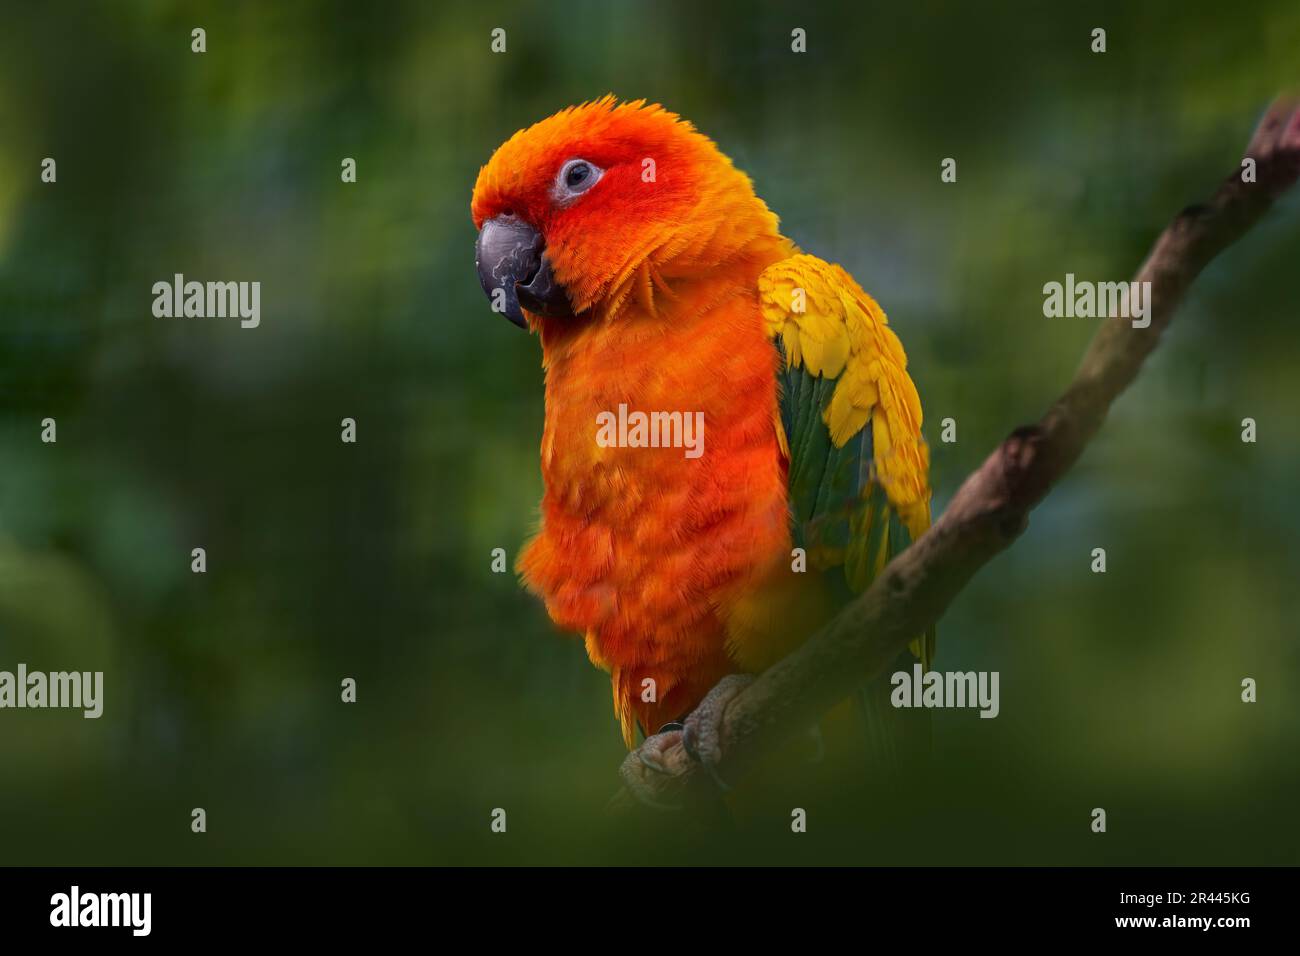 Sun parakeet or sun conure, Aratinga solstitialis, parrot native to northeastern South America. Orange red parrot in the green forest vegetation, Vene Stock Photo